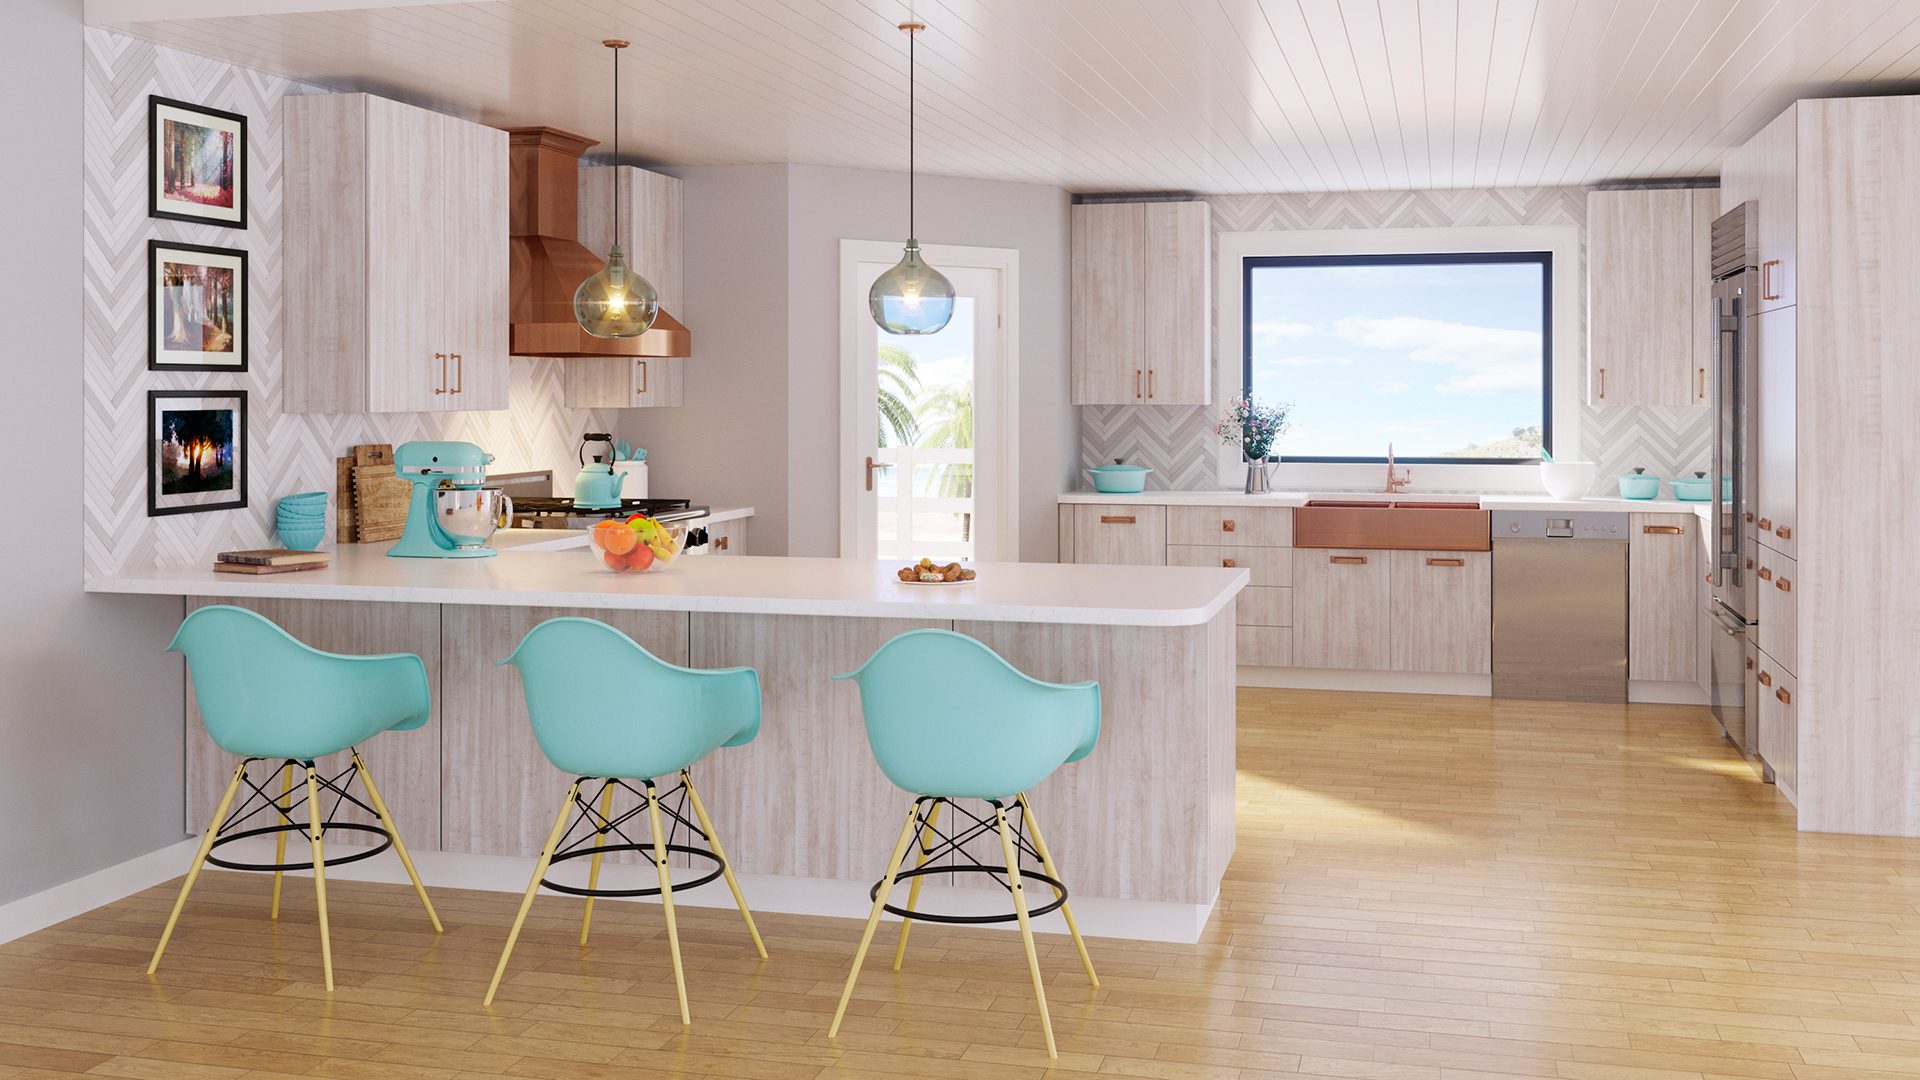 How do you create a minimalist kitchen?